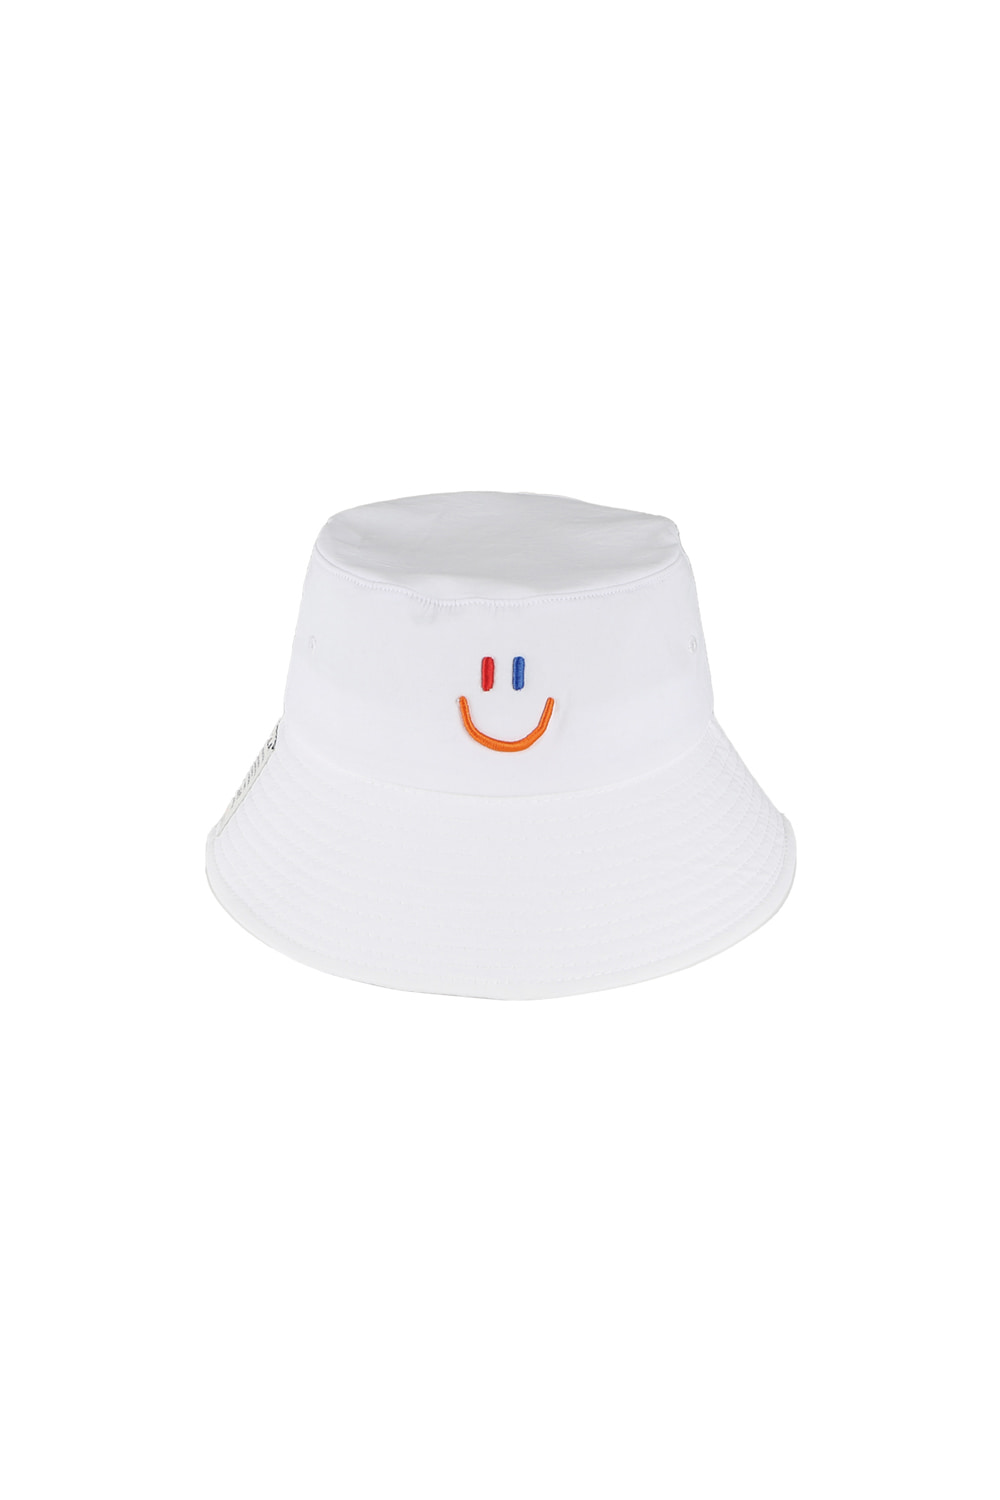 LaLa Anorak Bucket Hat [White]